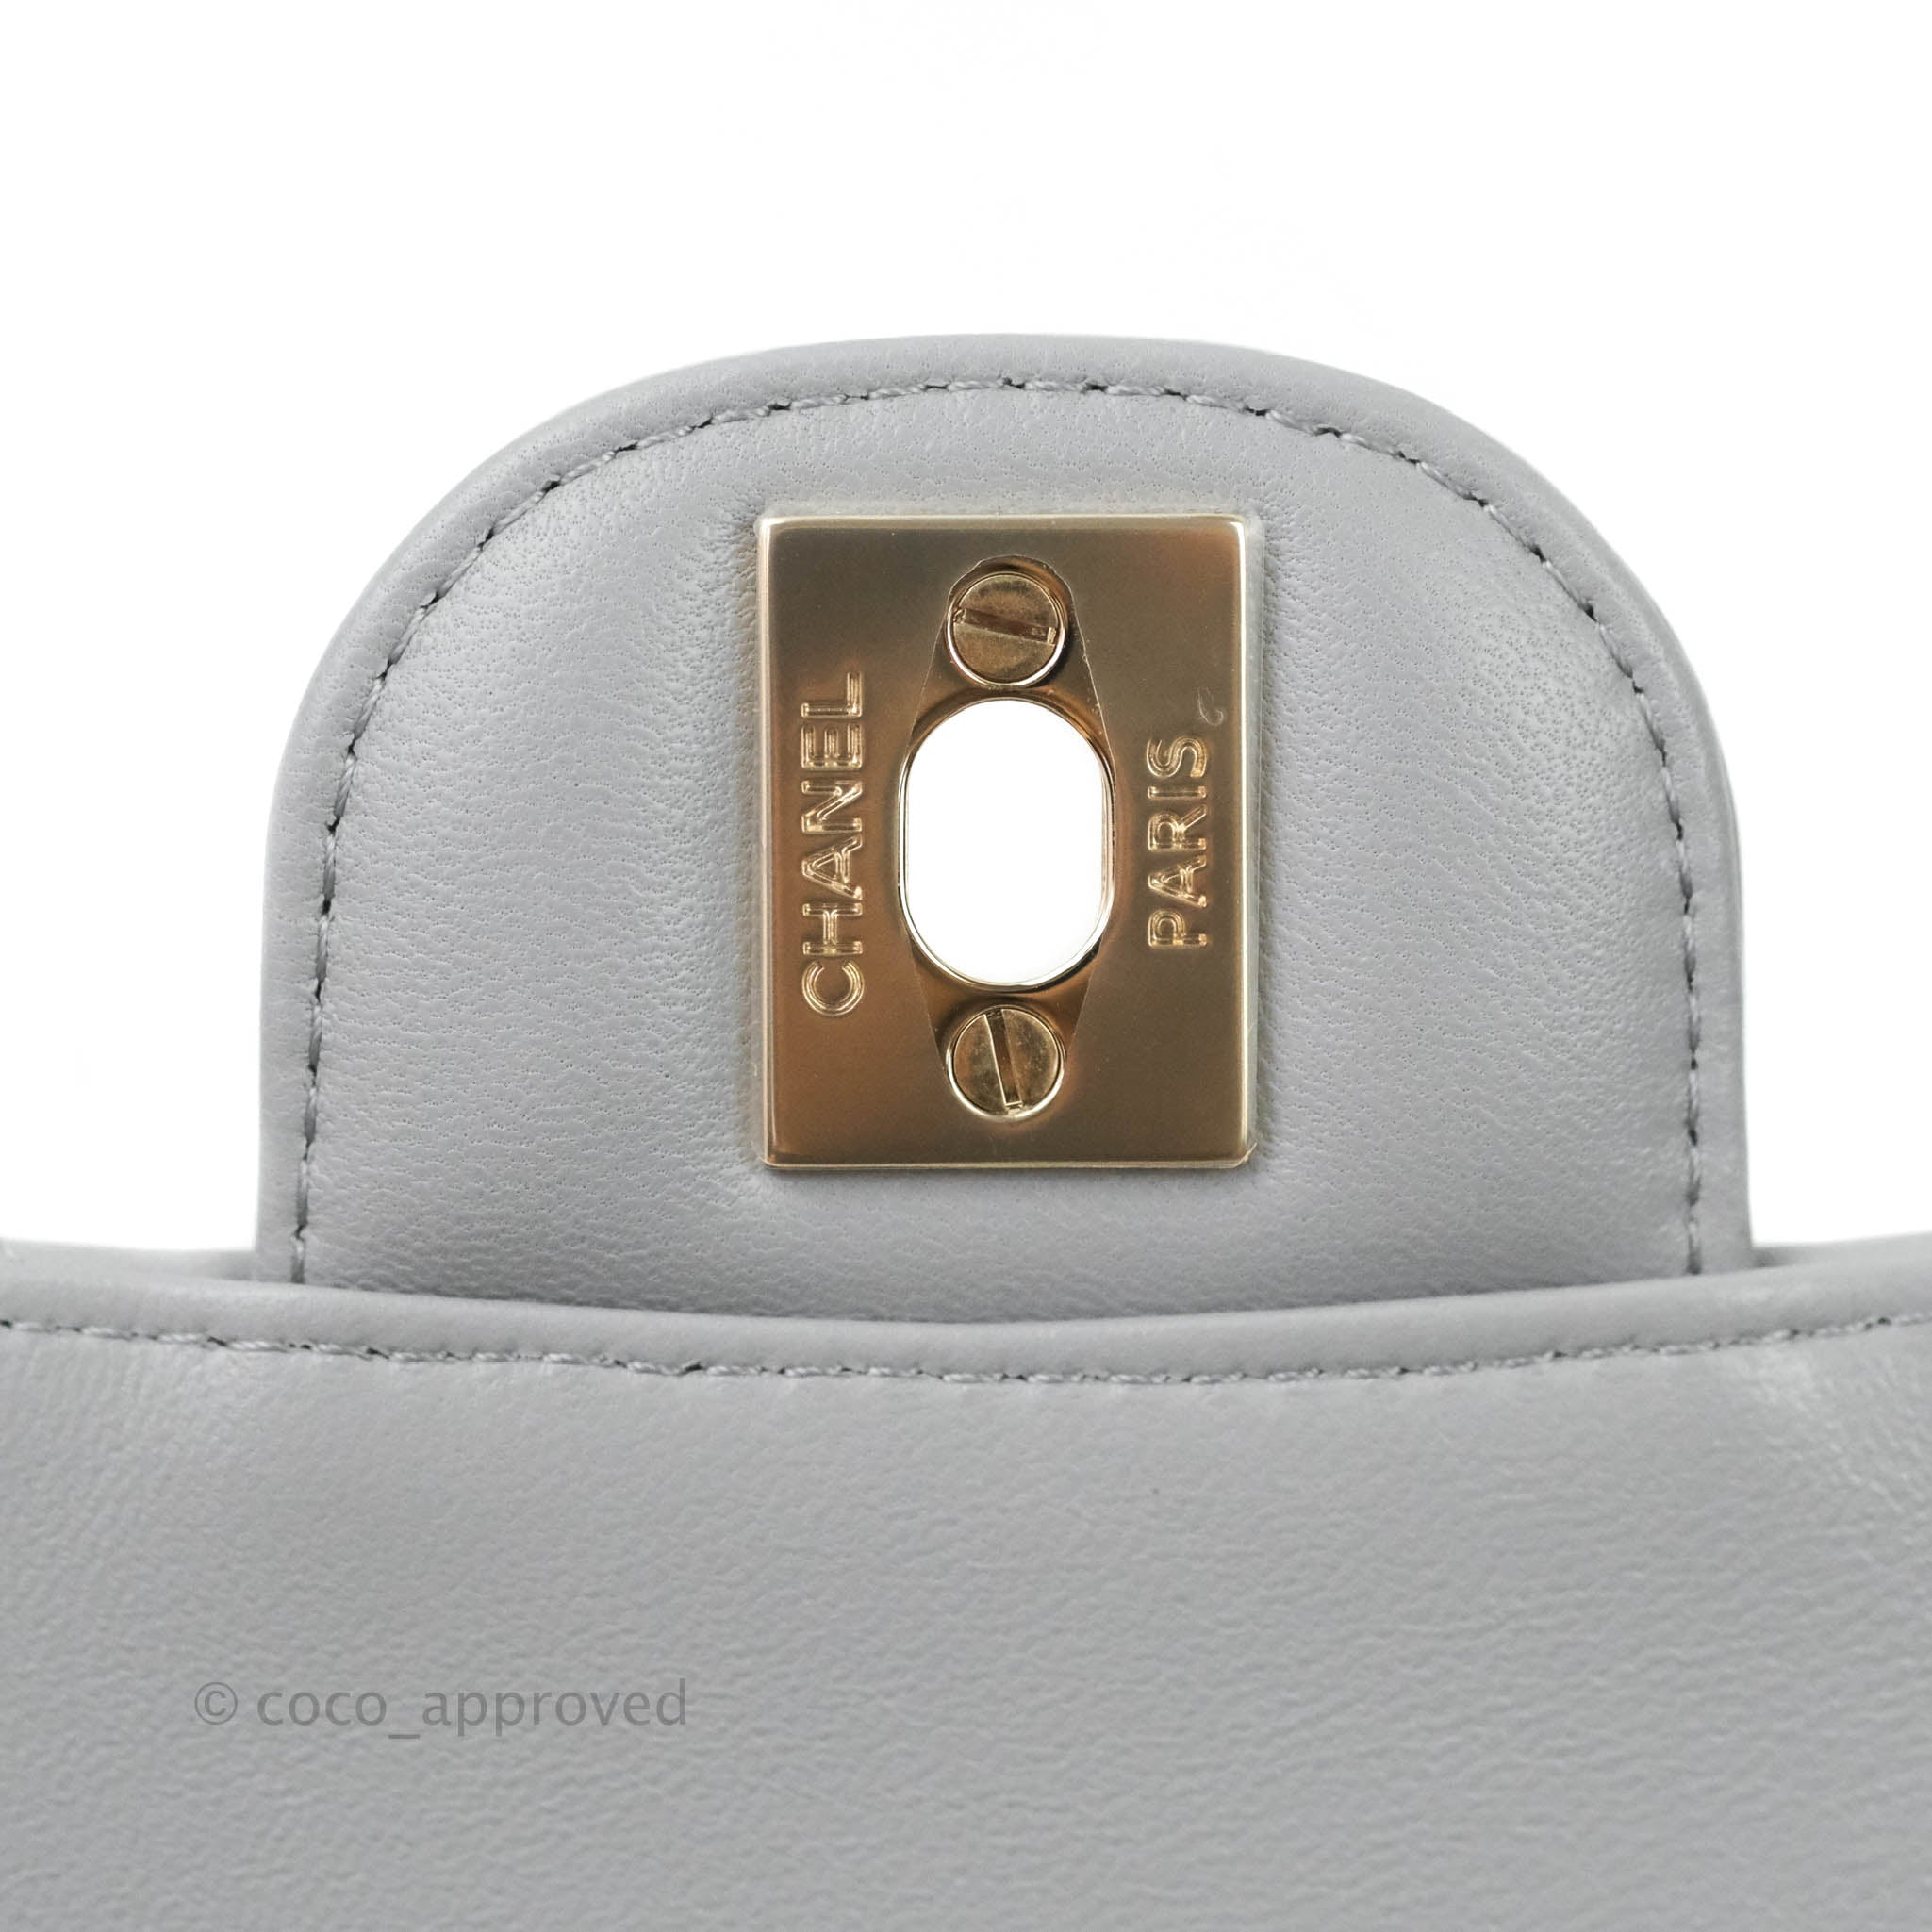 Chanel Mini Grey 20S Chevron with Gold Hardware, New in Box